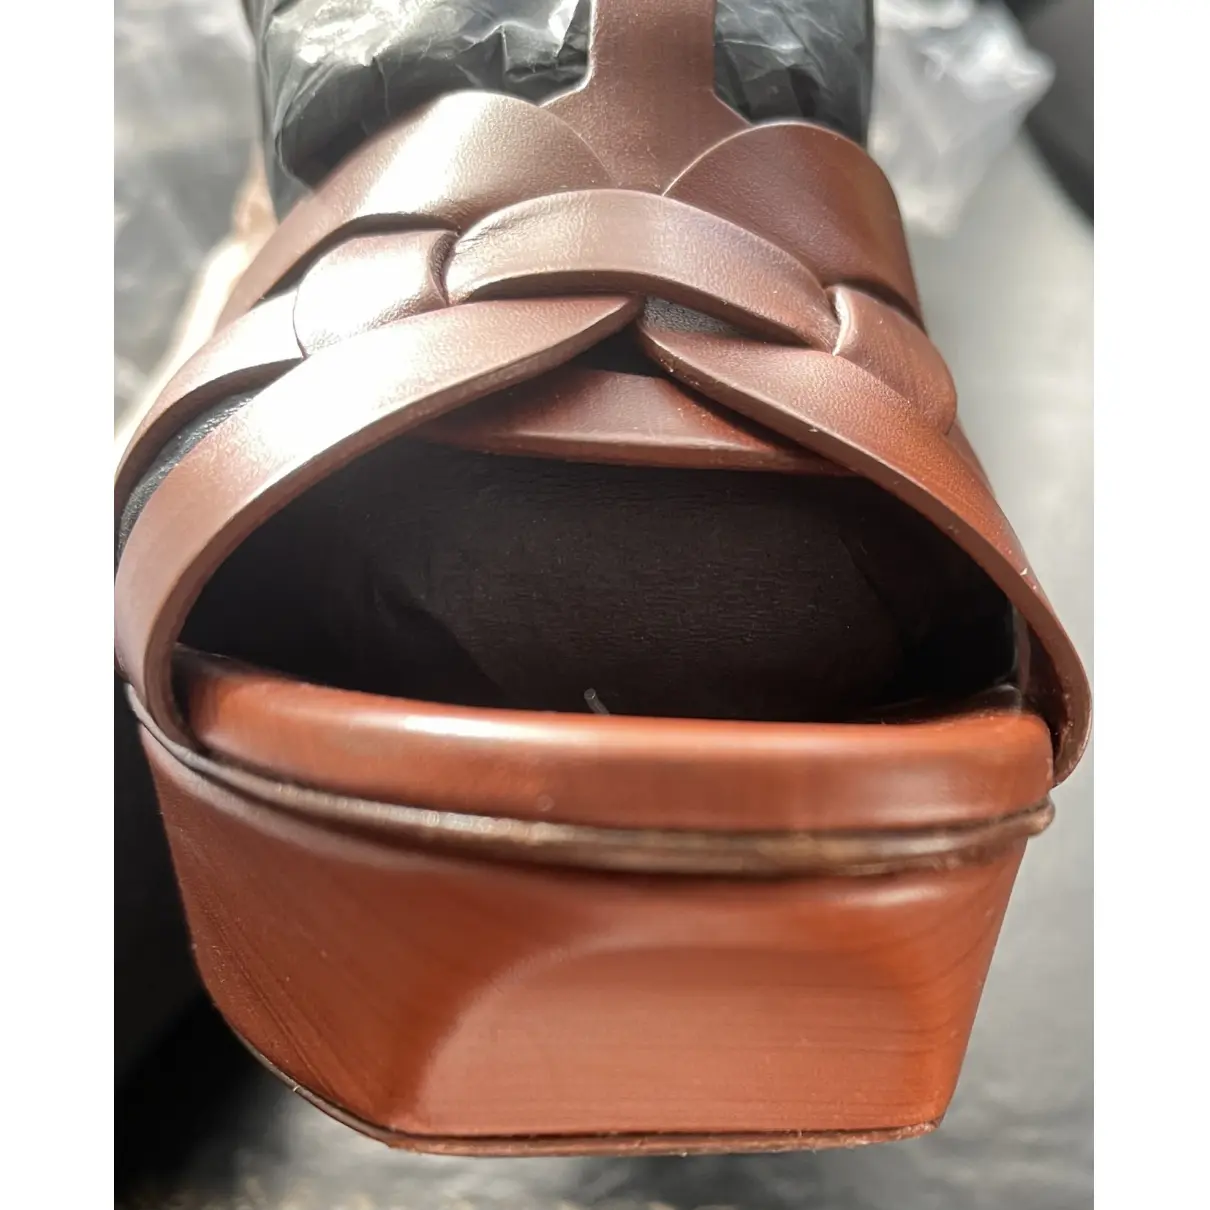 Tribute leather sandals Yves Saint Laurent